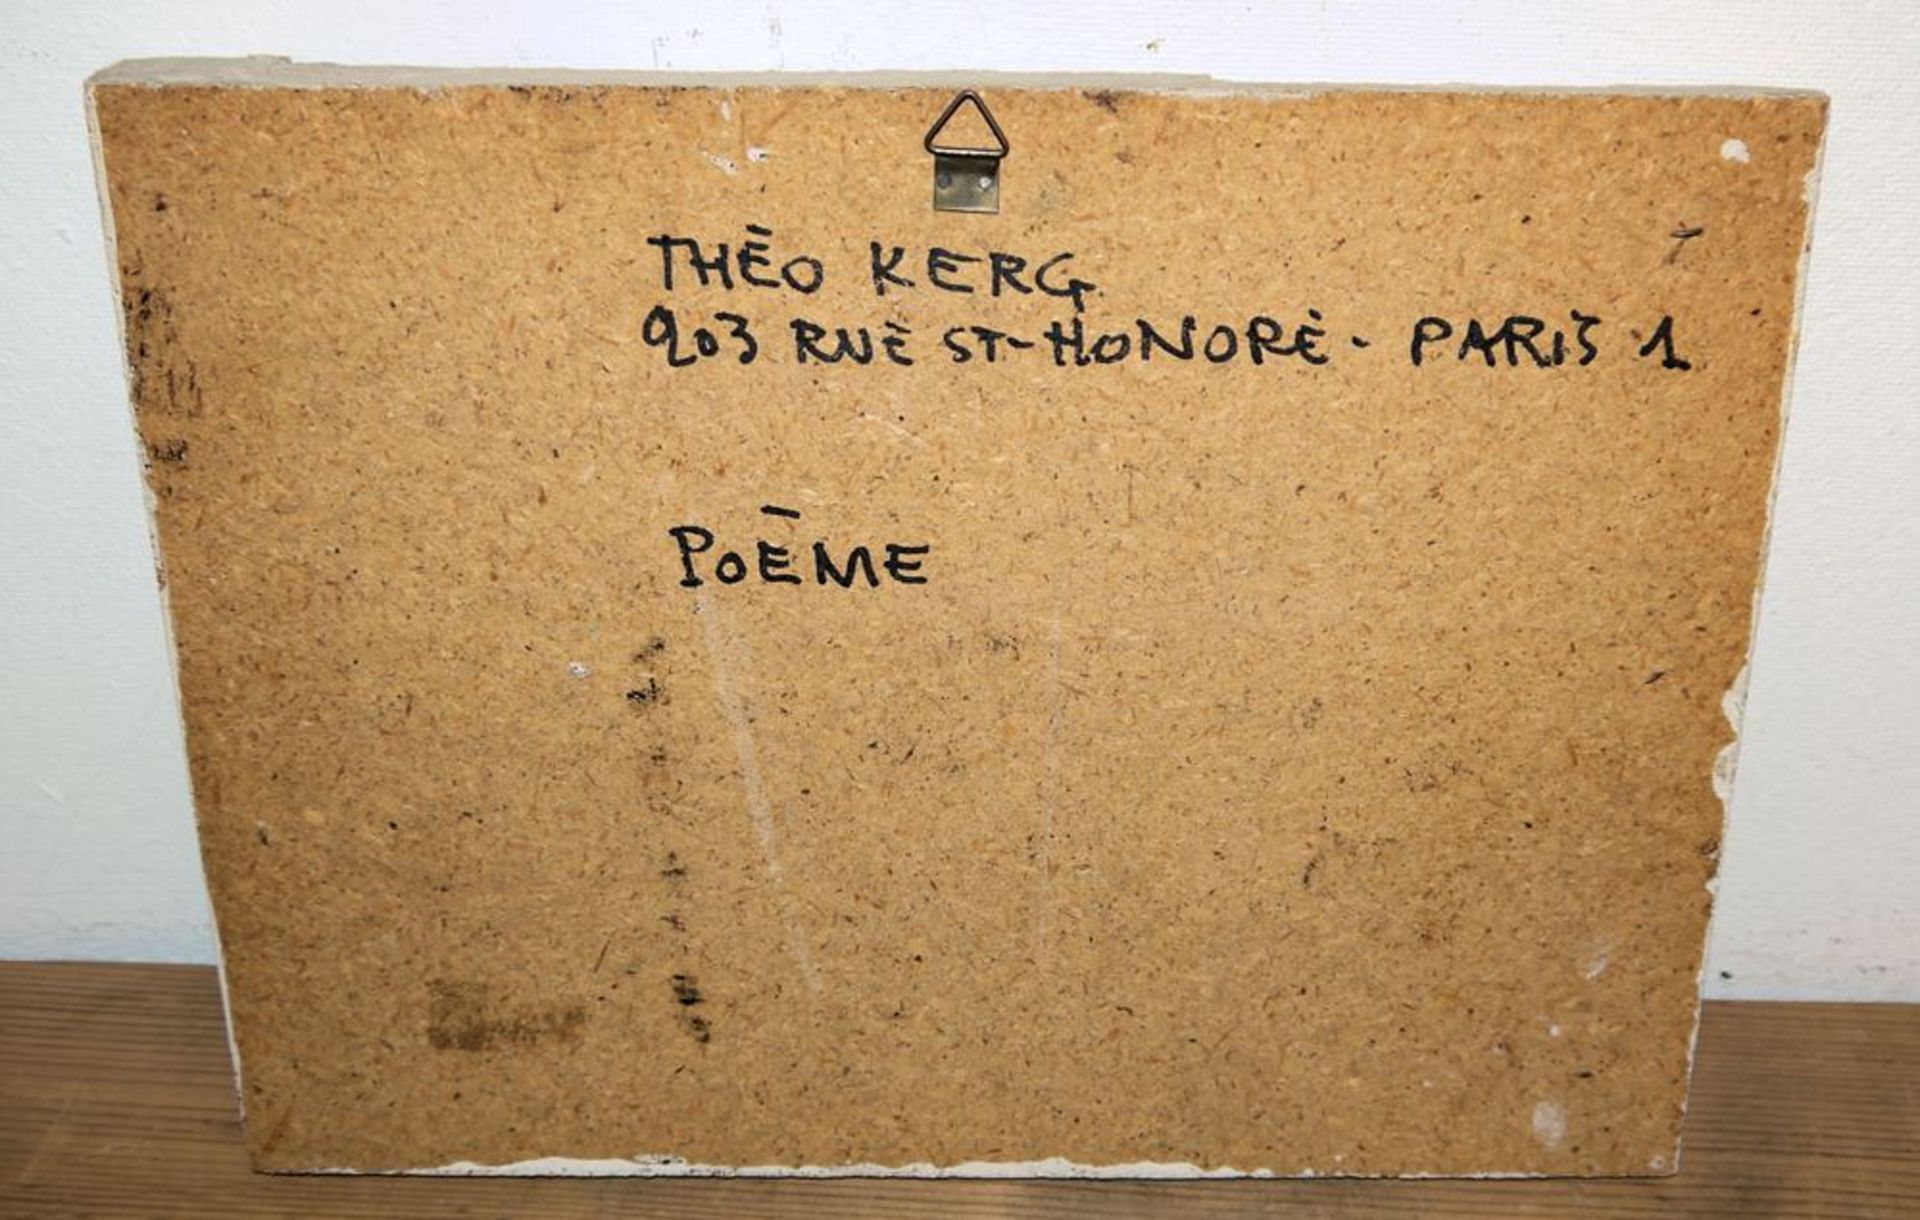 Theo Kerg, "Poeme", Relief (Öl/Stuck), 1950er Jahre - Image 3 of 3